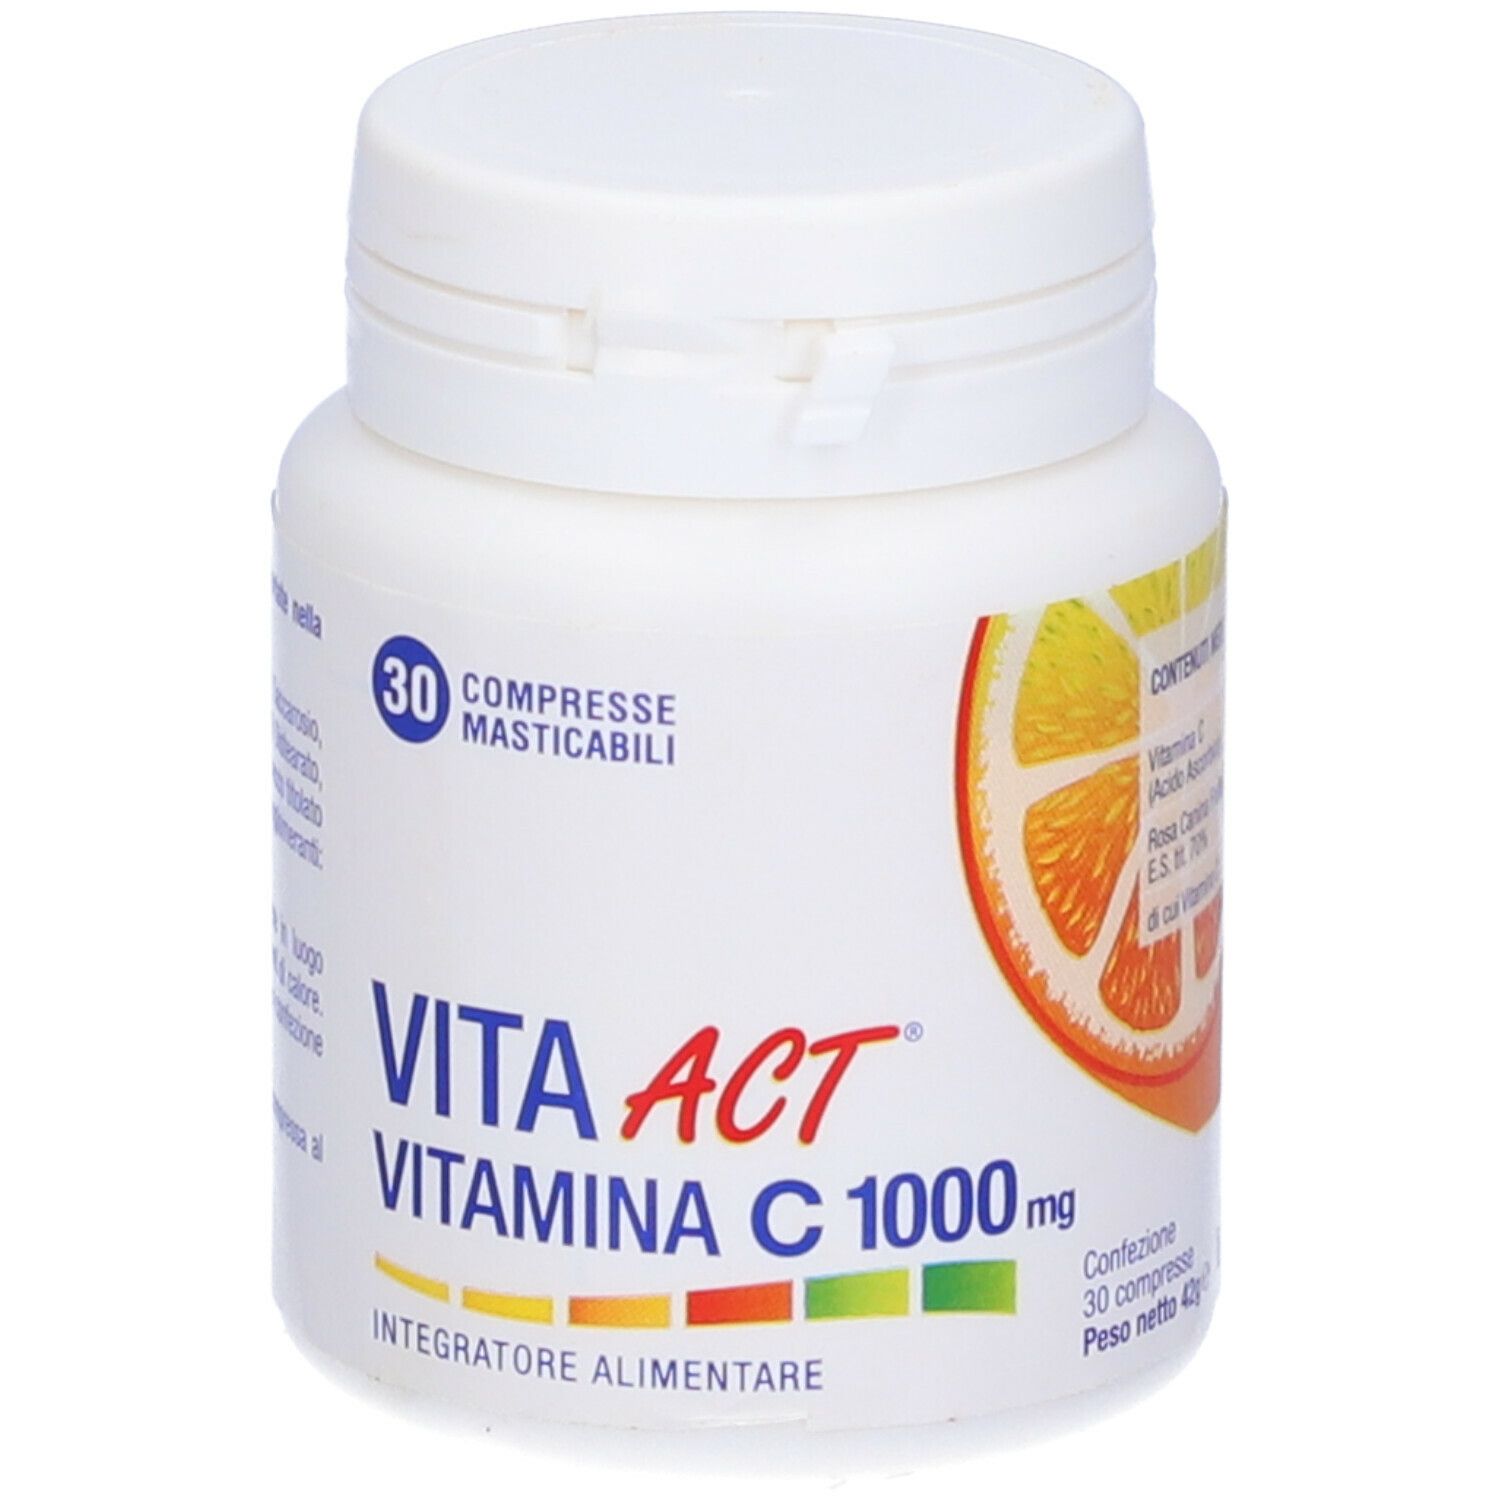 VITA Act® Vitamina C 1000 Integratore Alimentare